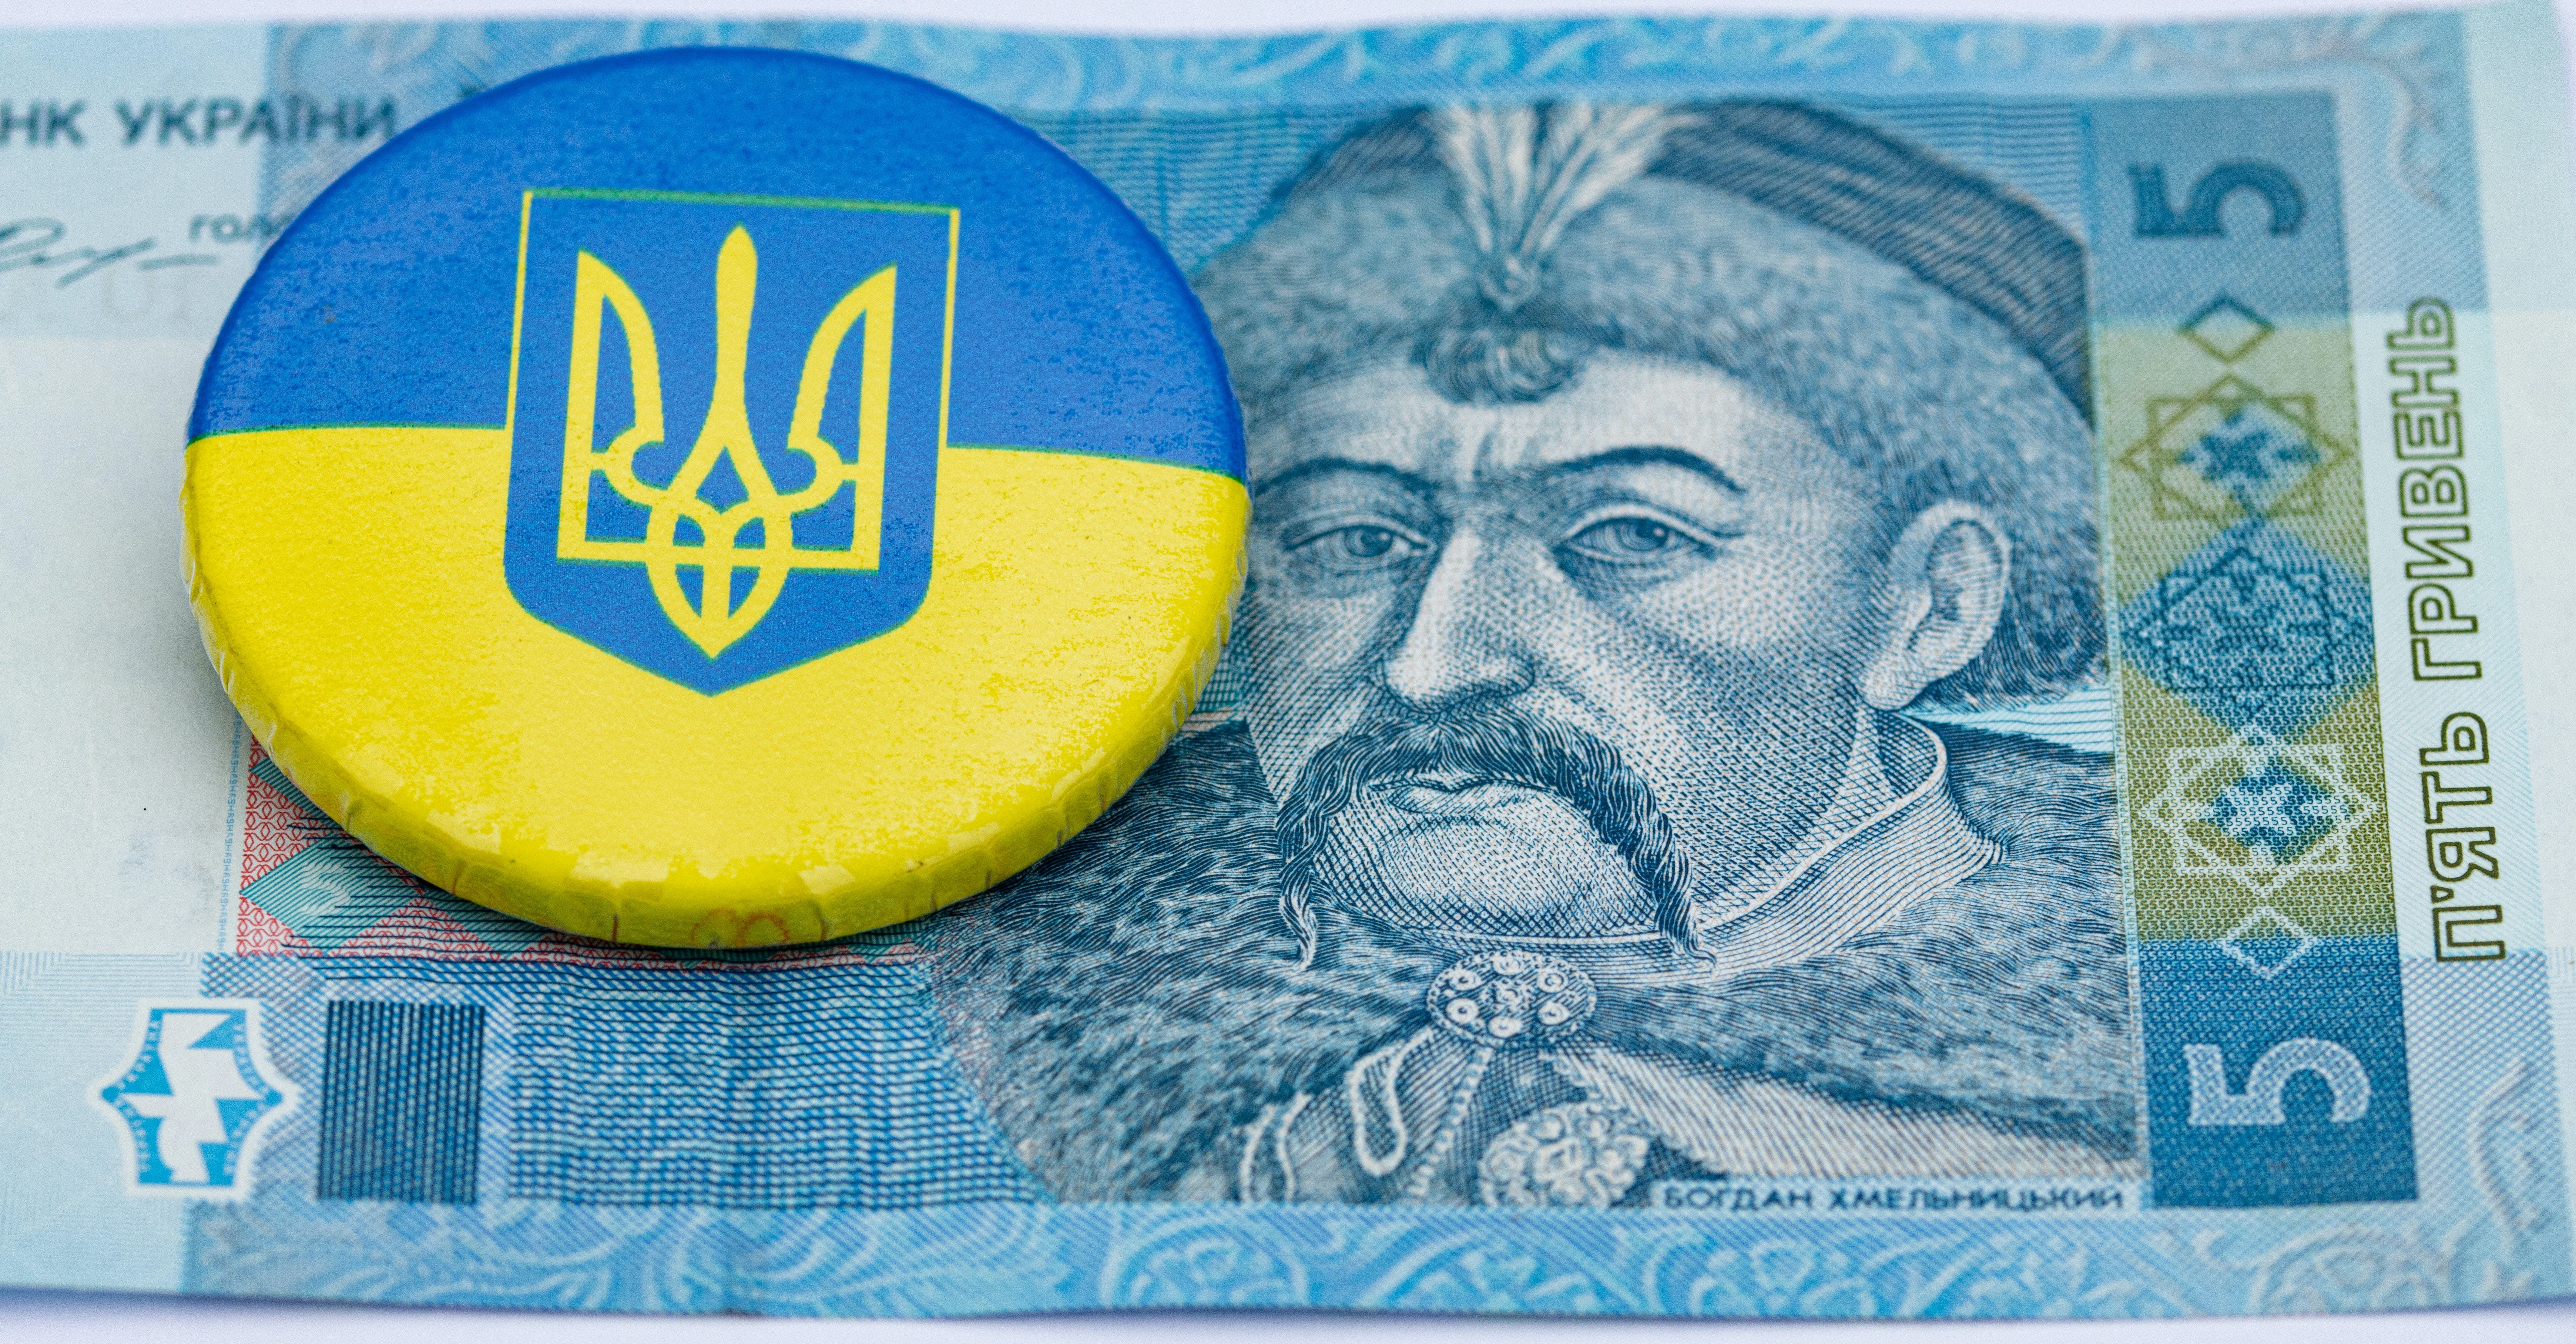 Ukraine Central Bank Explores CBDC As A 'Key Element' To Raise Money, Buy Goods